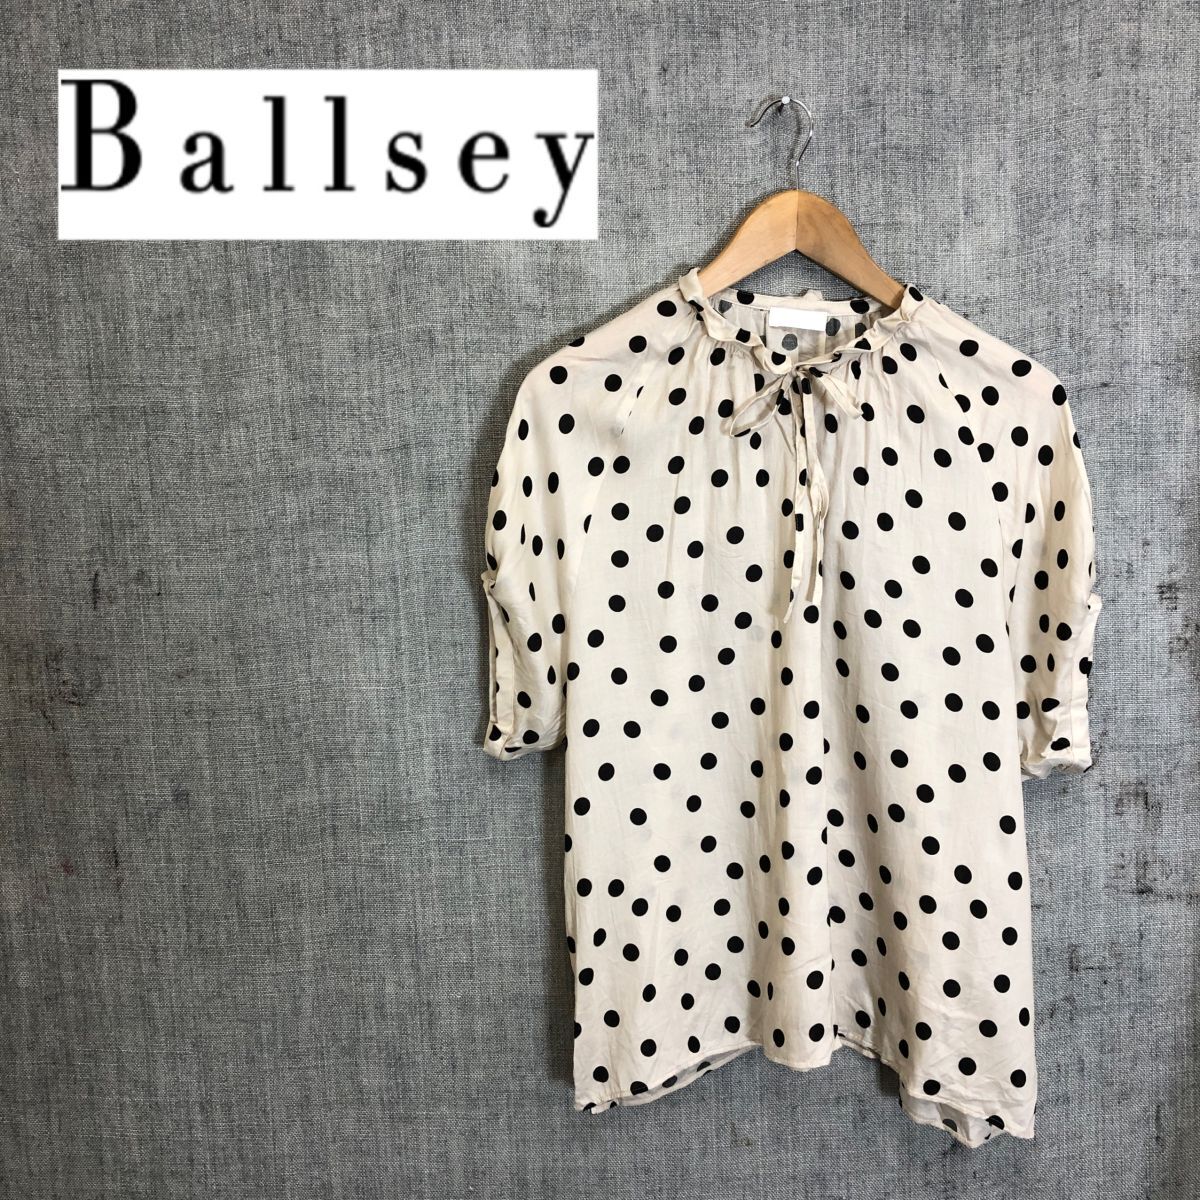 G361-G*ballsey Ballsey blouse *size36 dot pattern beige black lady's tops short sleeves ribbon frill shirt summer clothing ga- Lee 